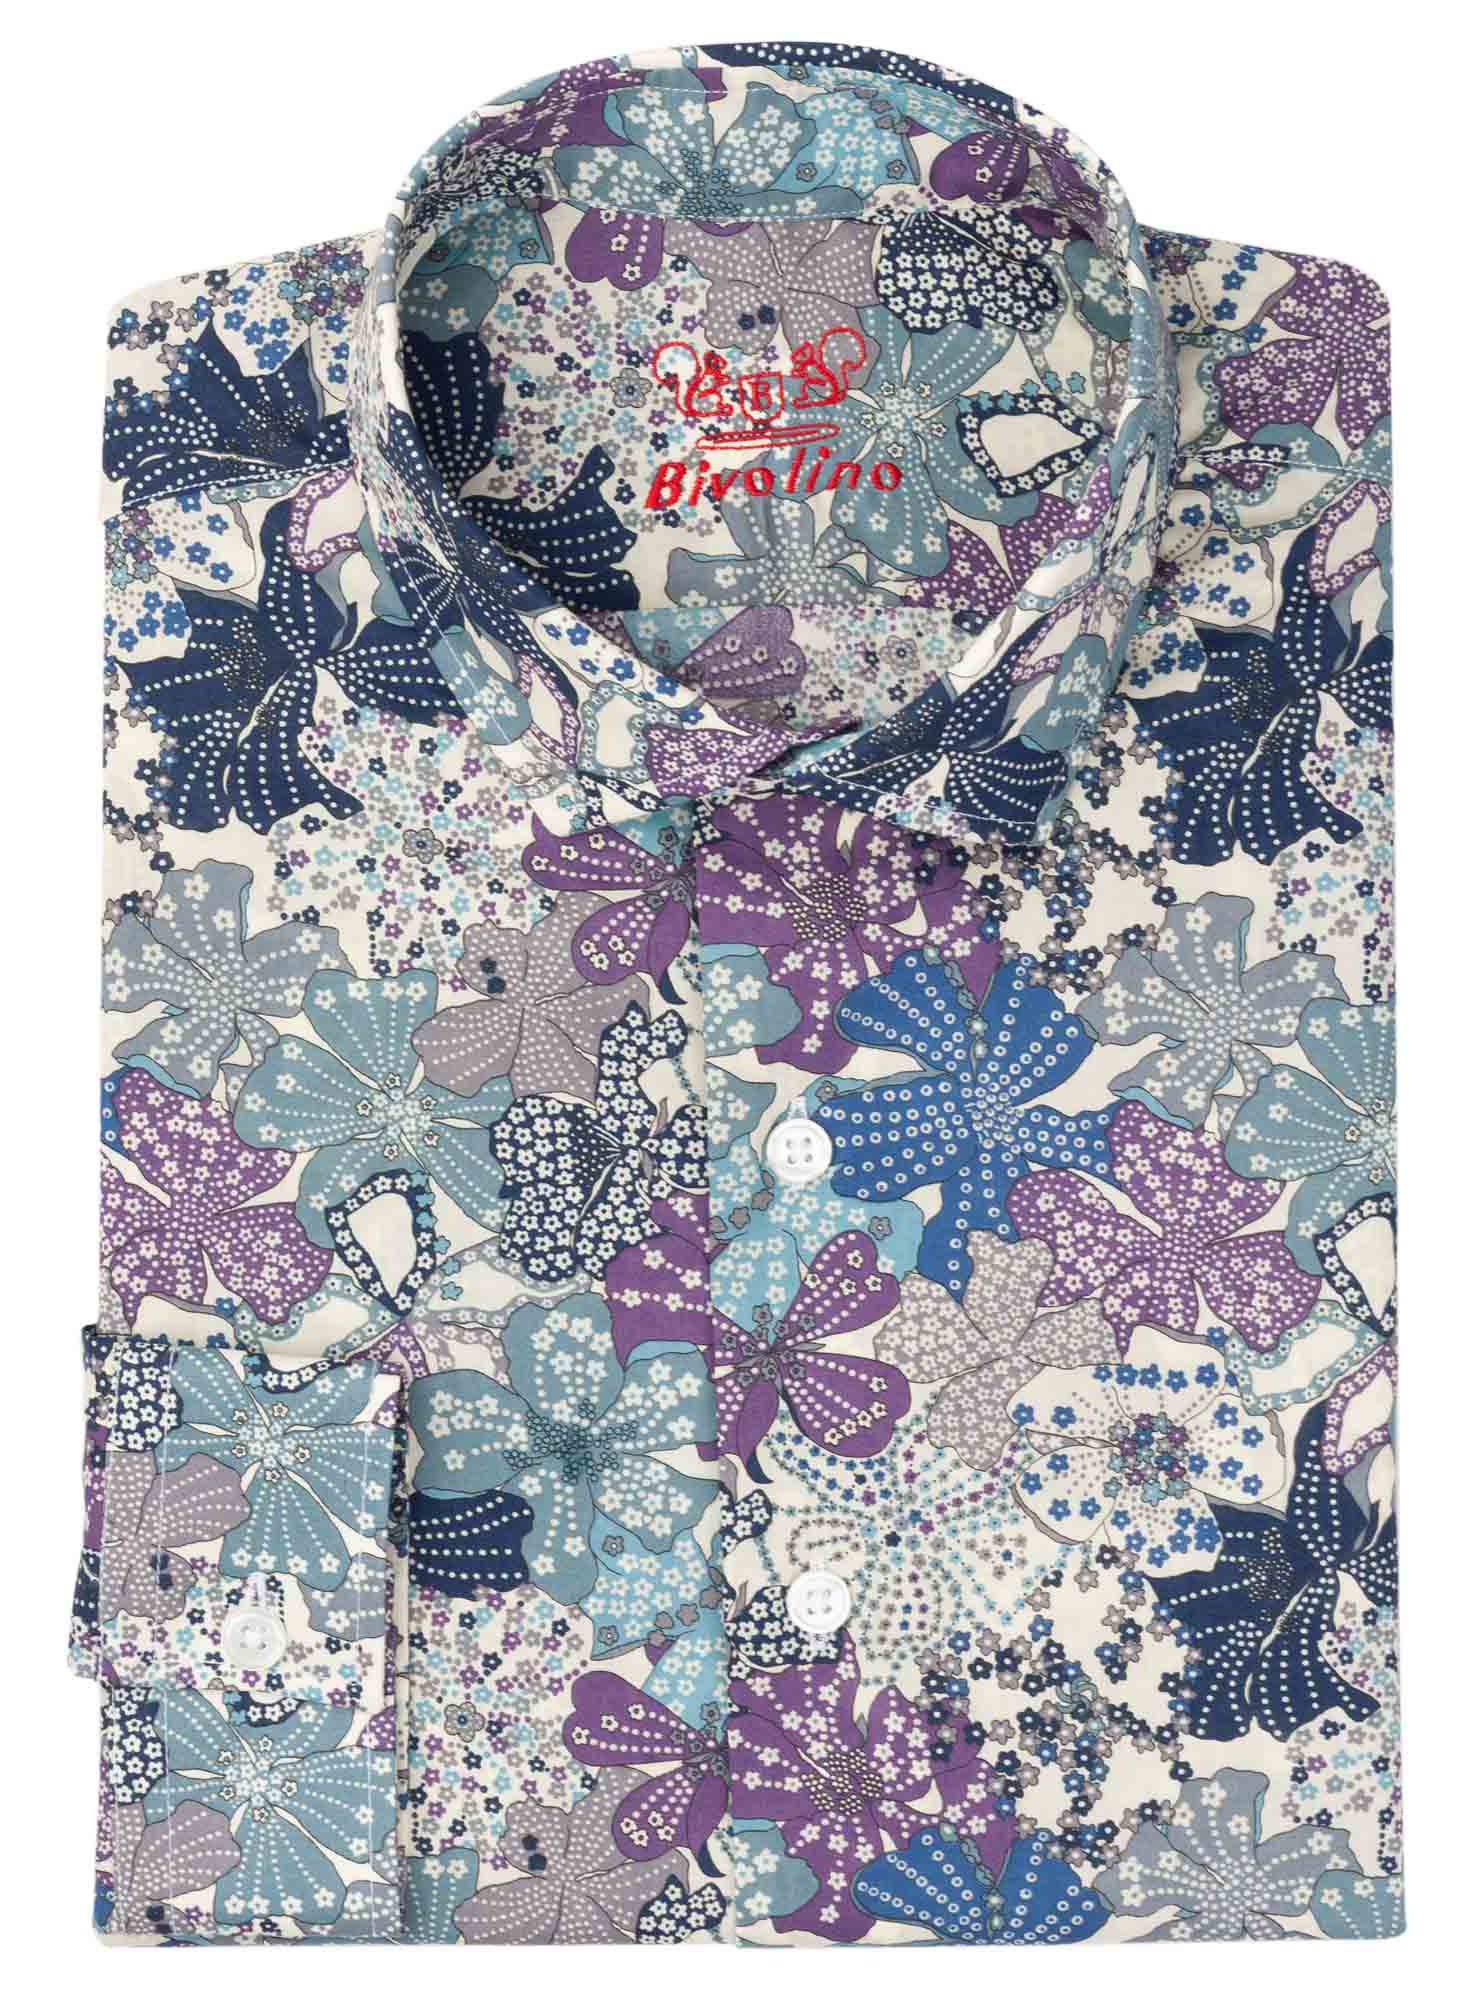 LIBERTINO - camisa hombre floral de algodón y cachemira - LIBERTY 7